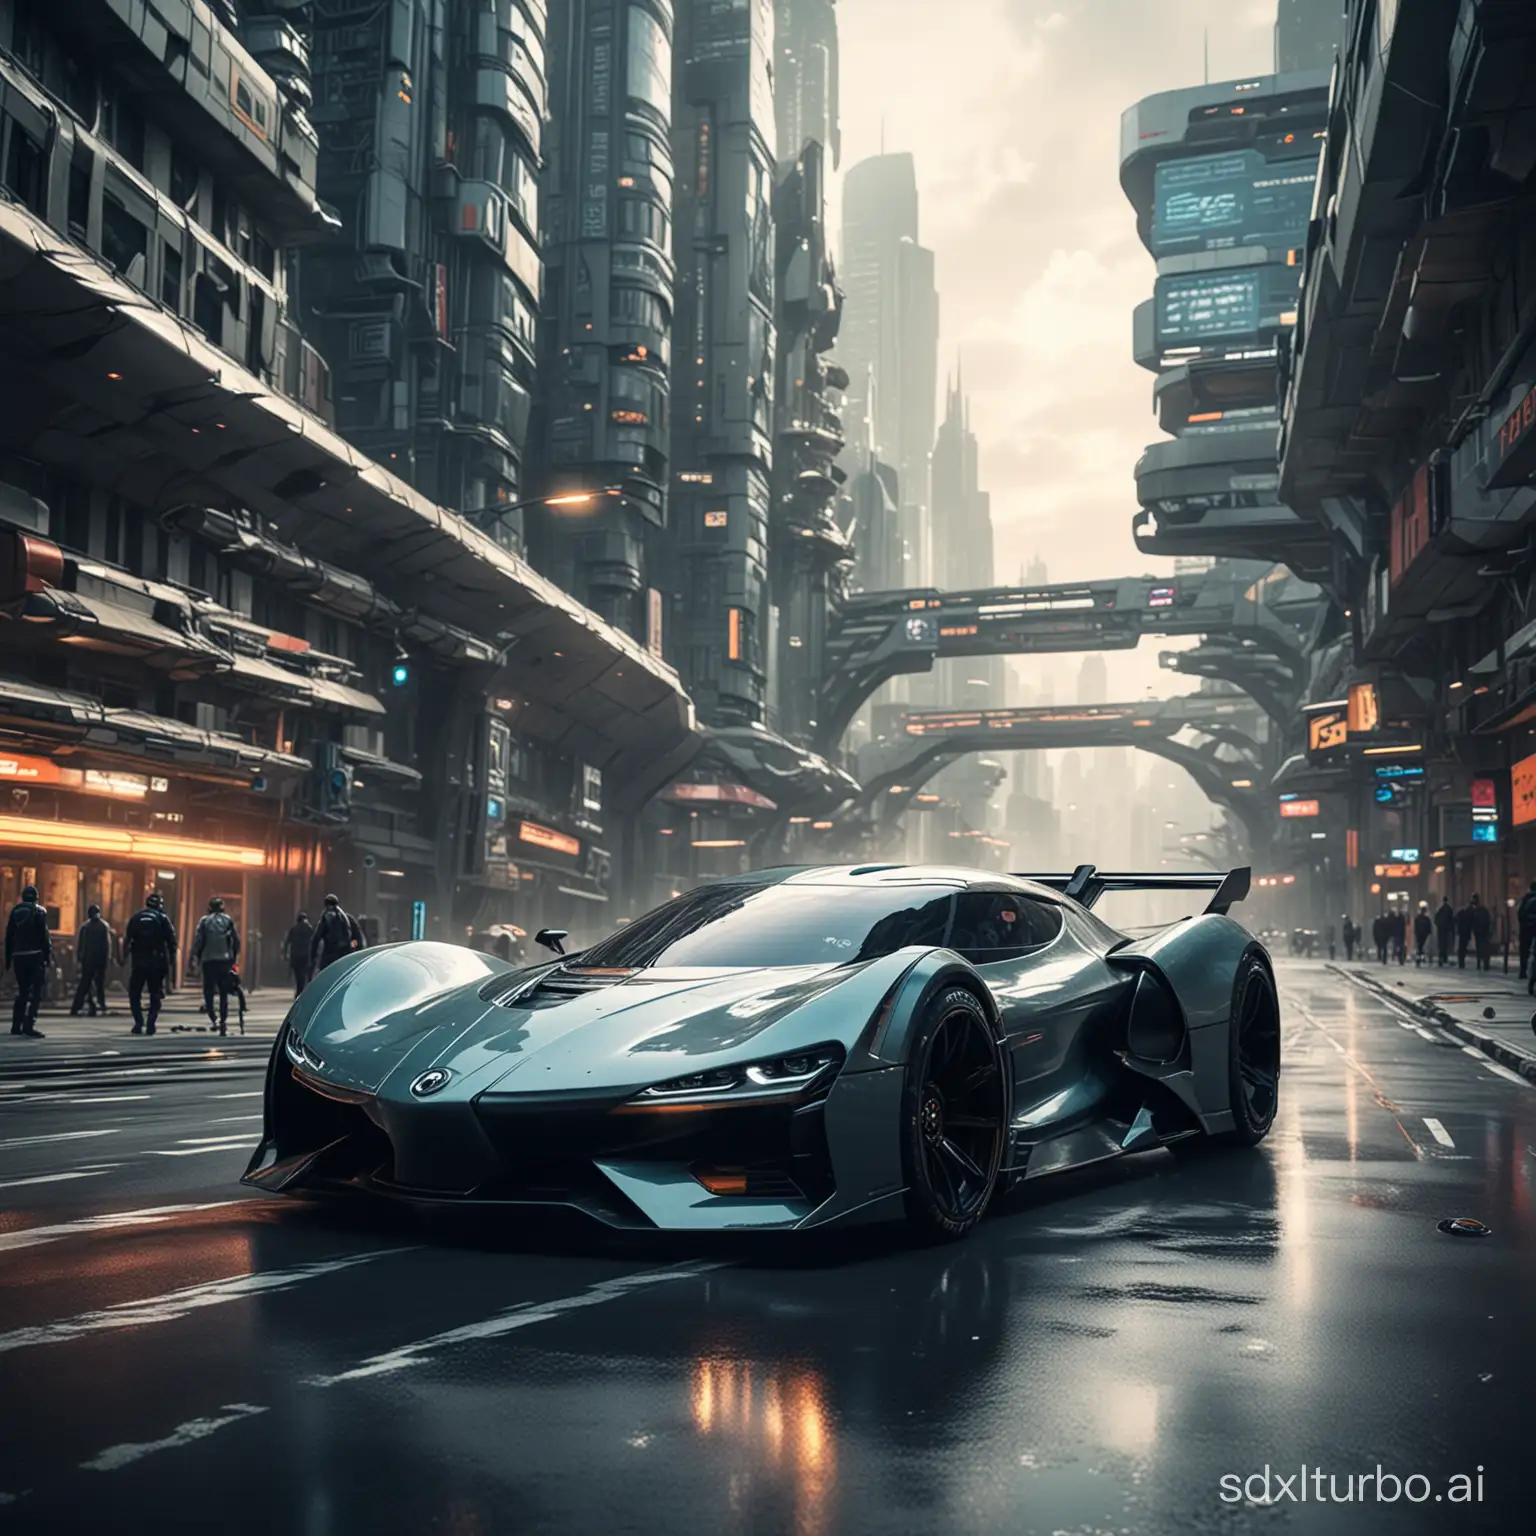 Futuristic-Car-Racer-Speeding-Through-Urban-Metropolis